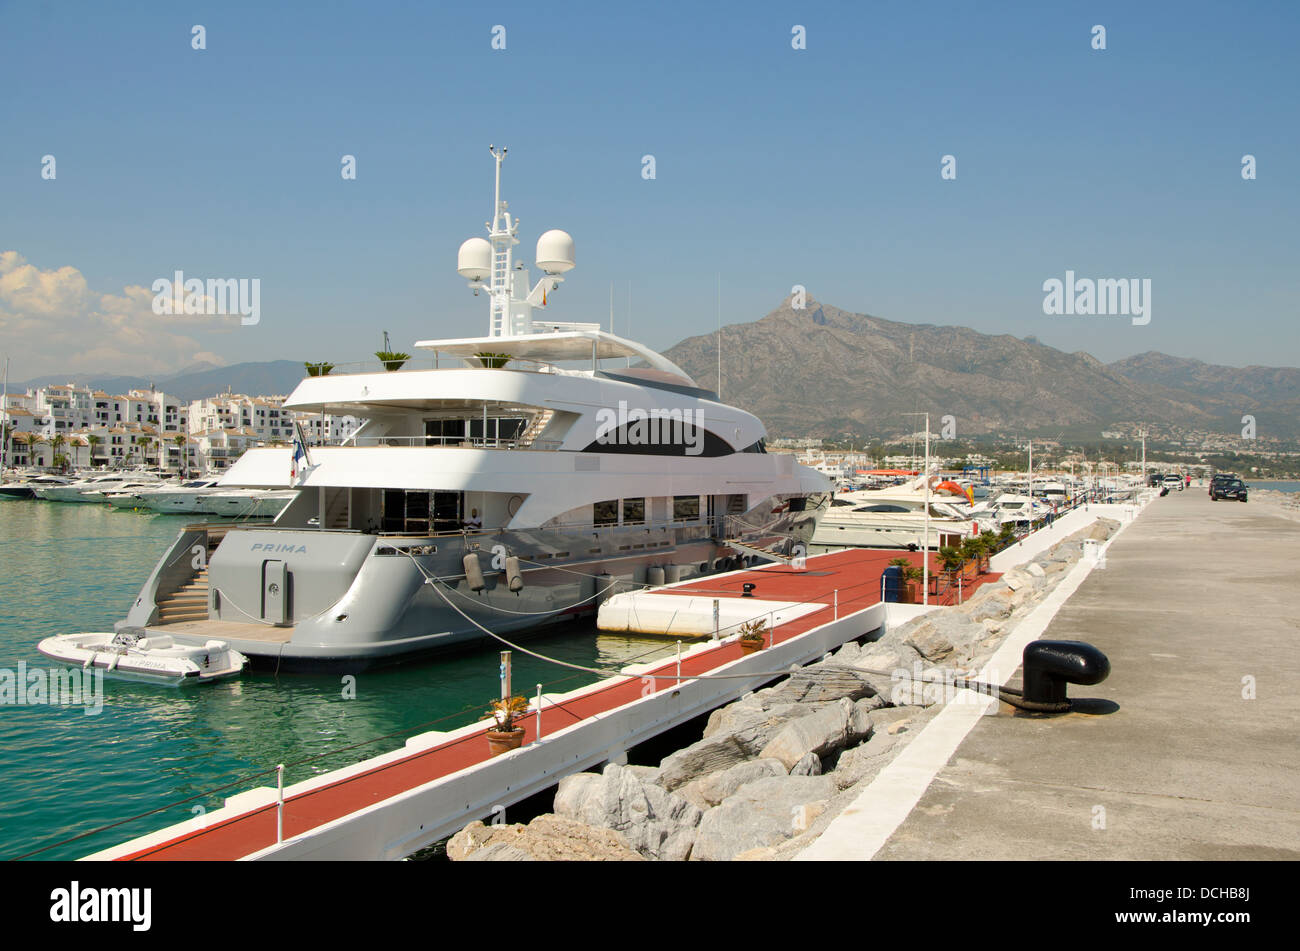 Luxury super-yacht 'prima' in the marina of Puerto Banus in Marbella with La concha mountain in background Stock Photo